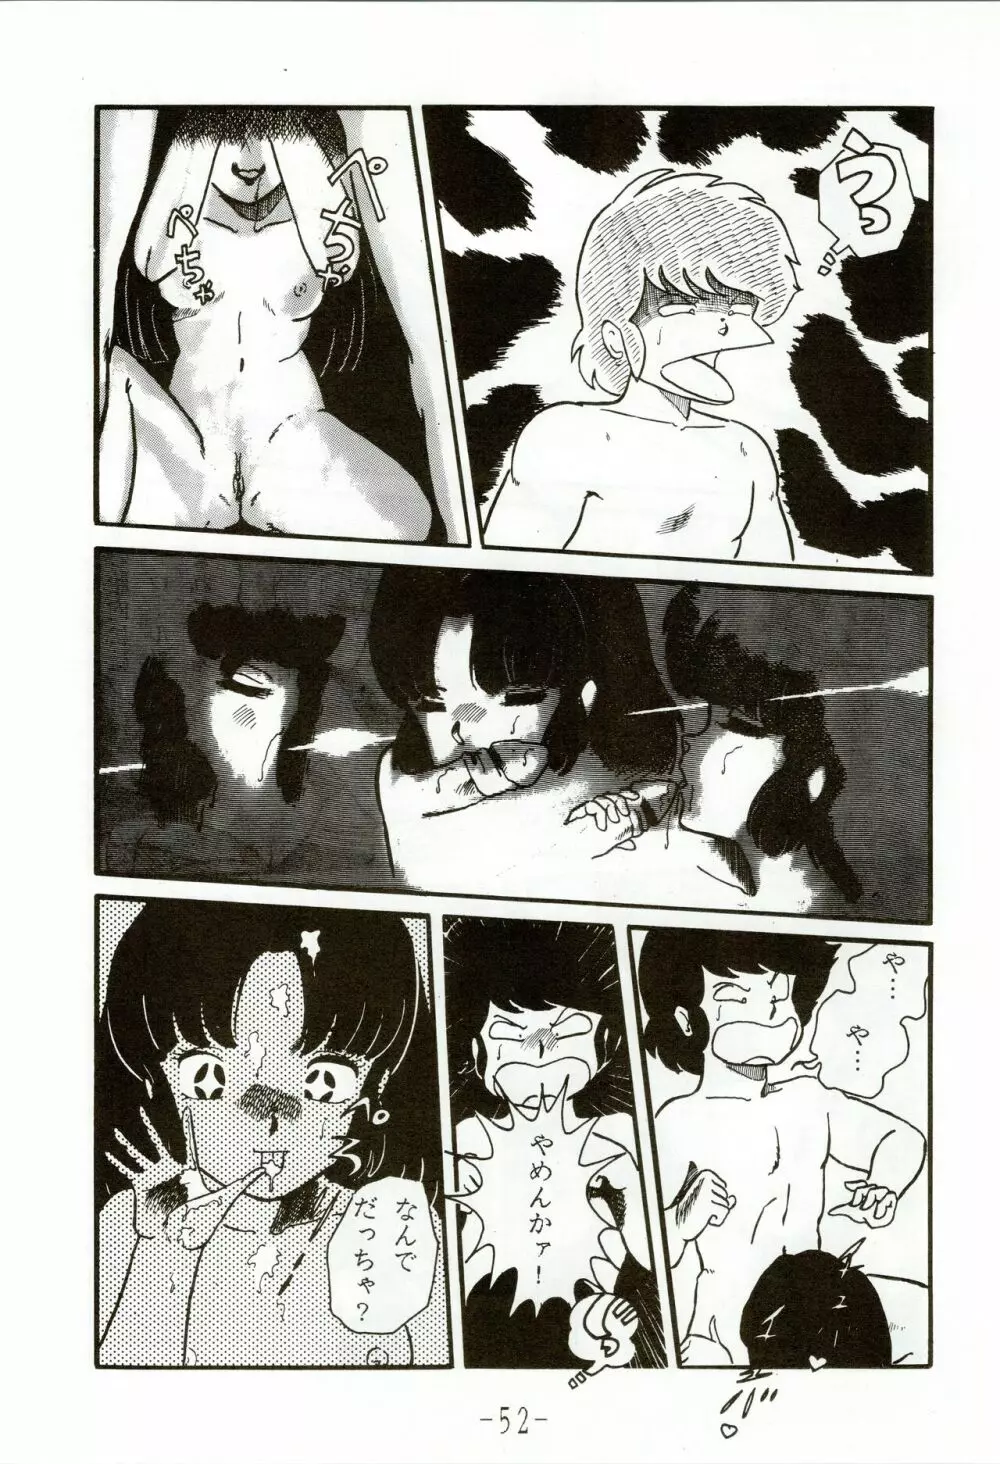 甲冑伝説 - page52